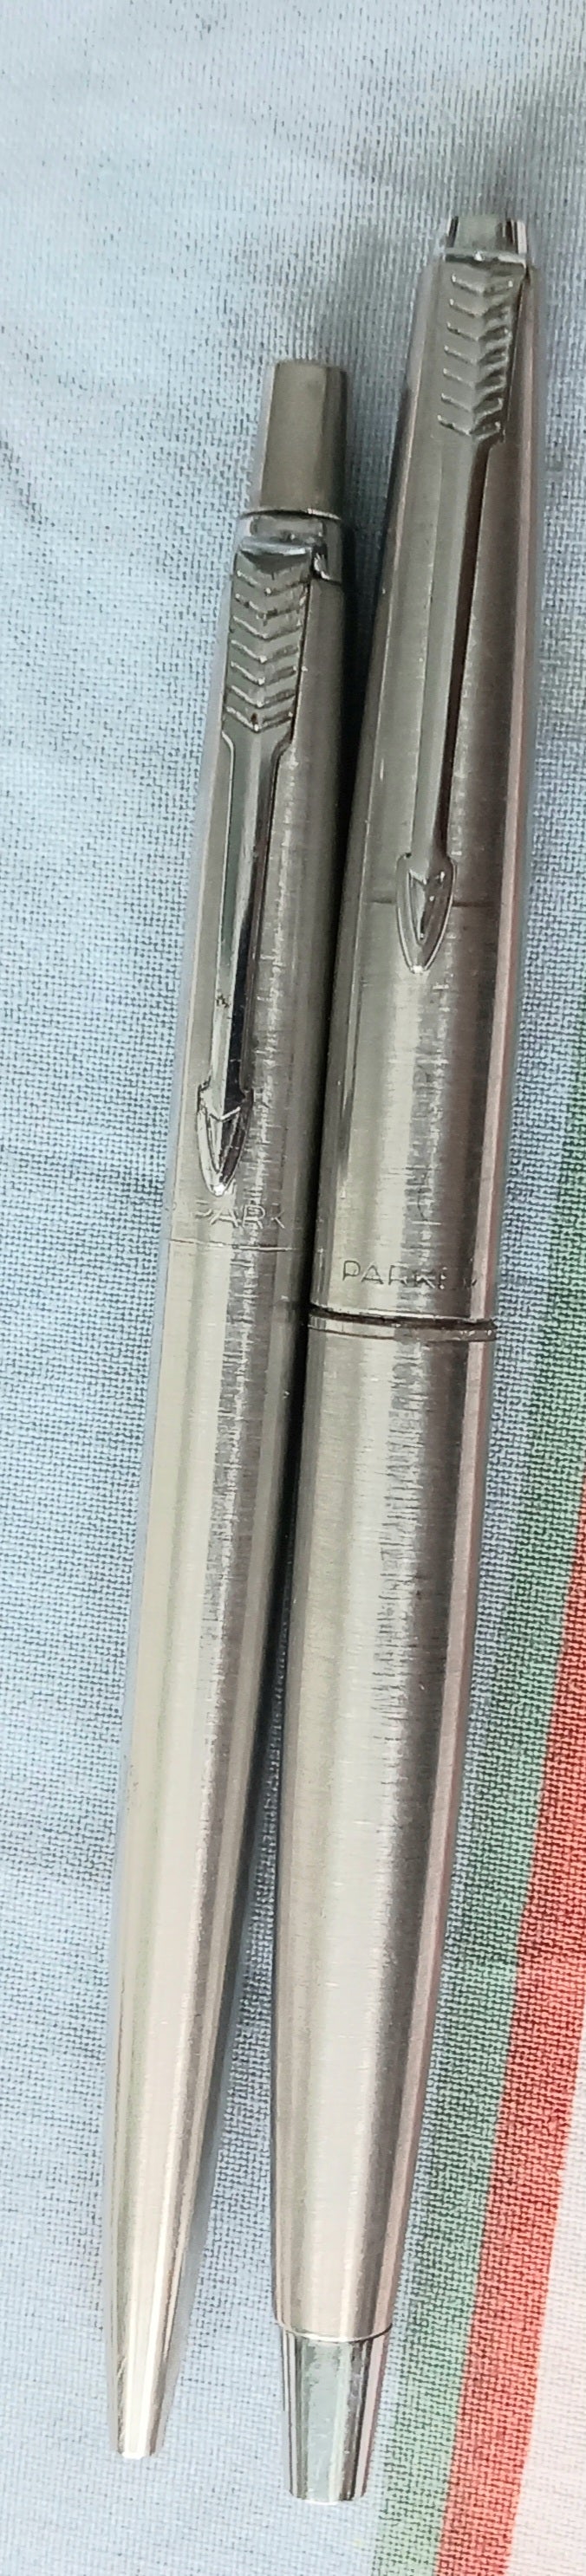 Parker 45 Fountain Pen and Ballpoint Pen